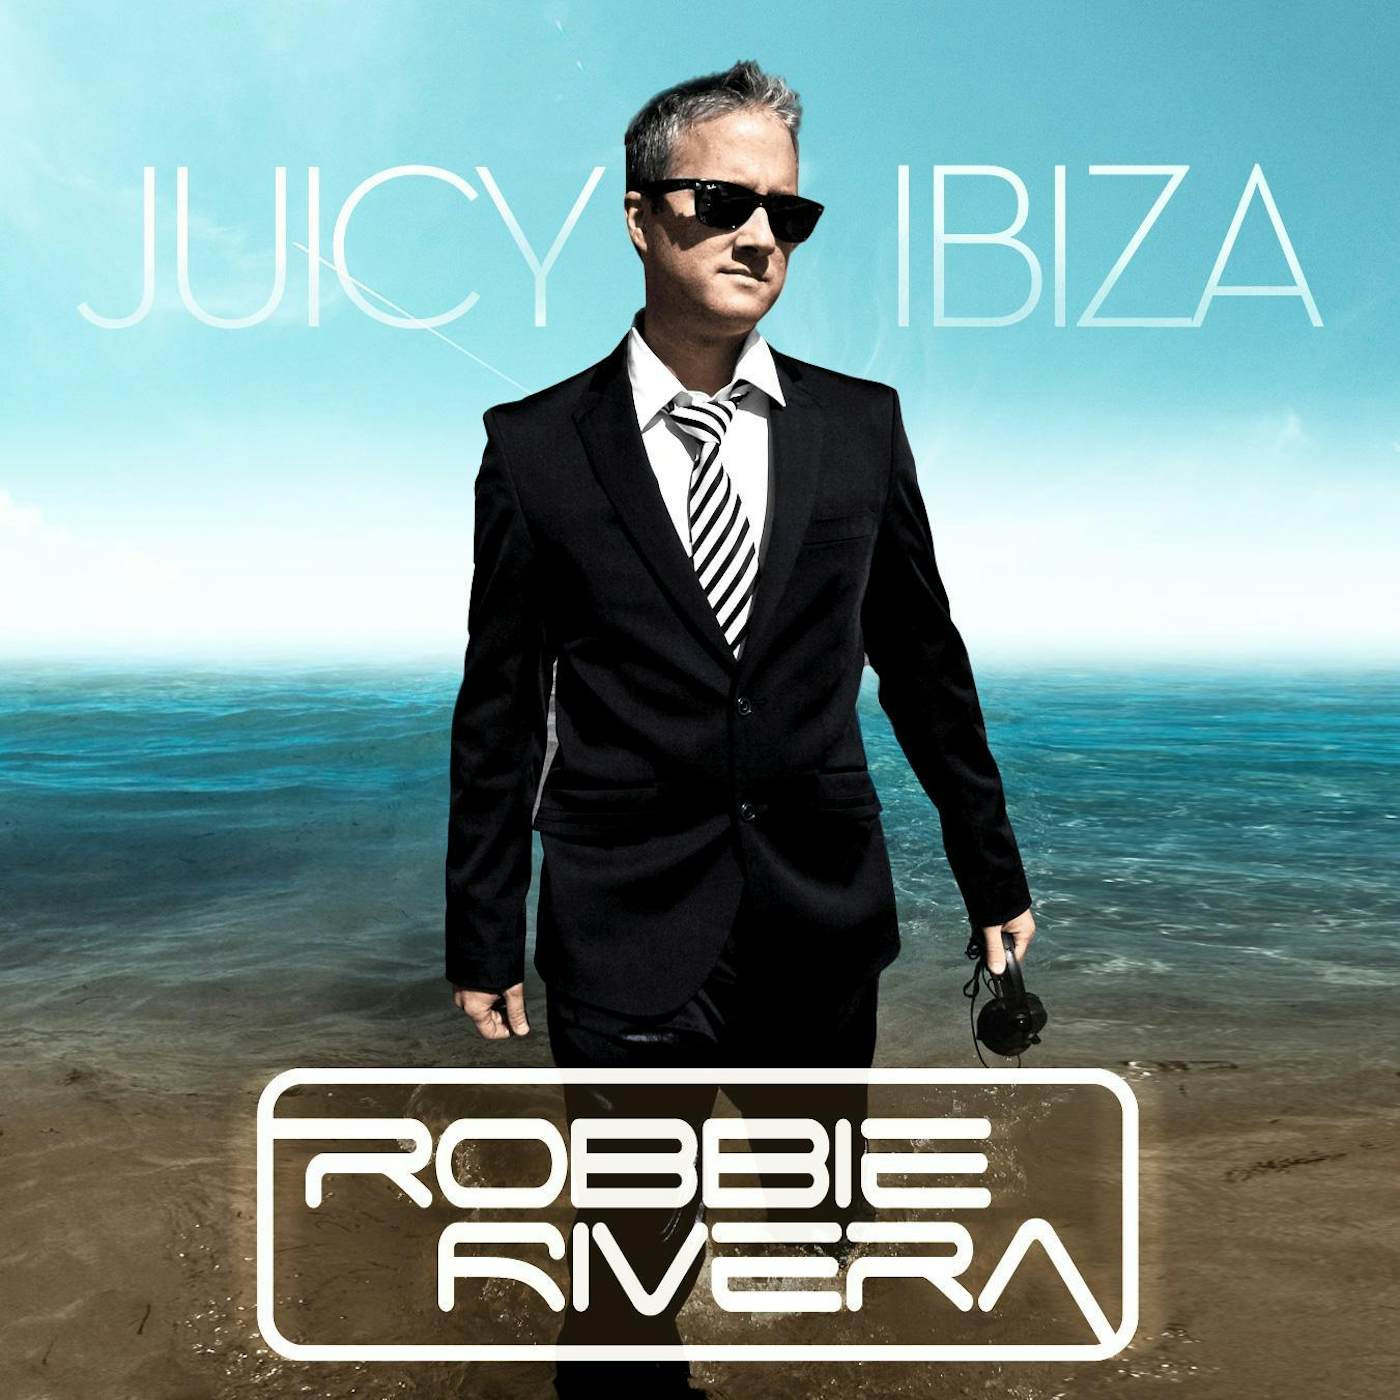 Robbie Rivera - Juicy Ibiza 2009